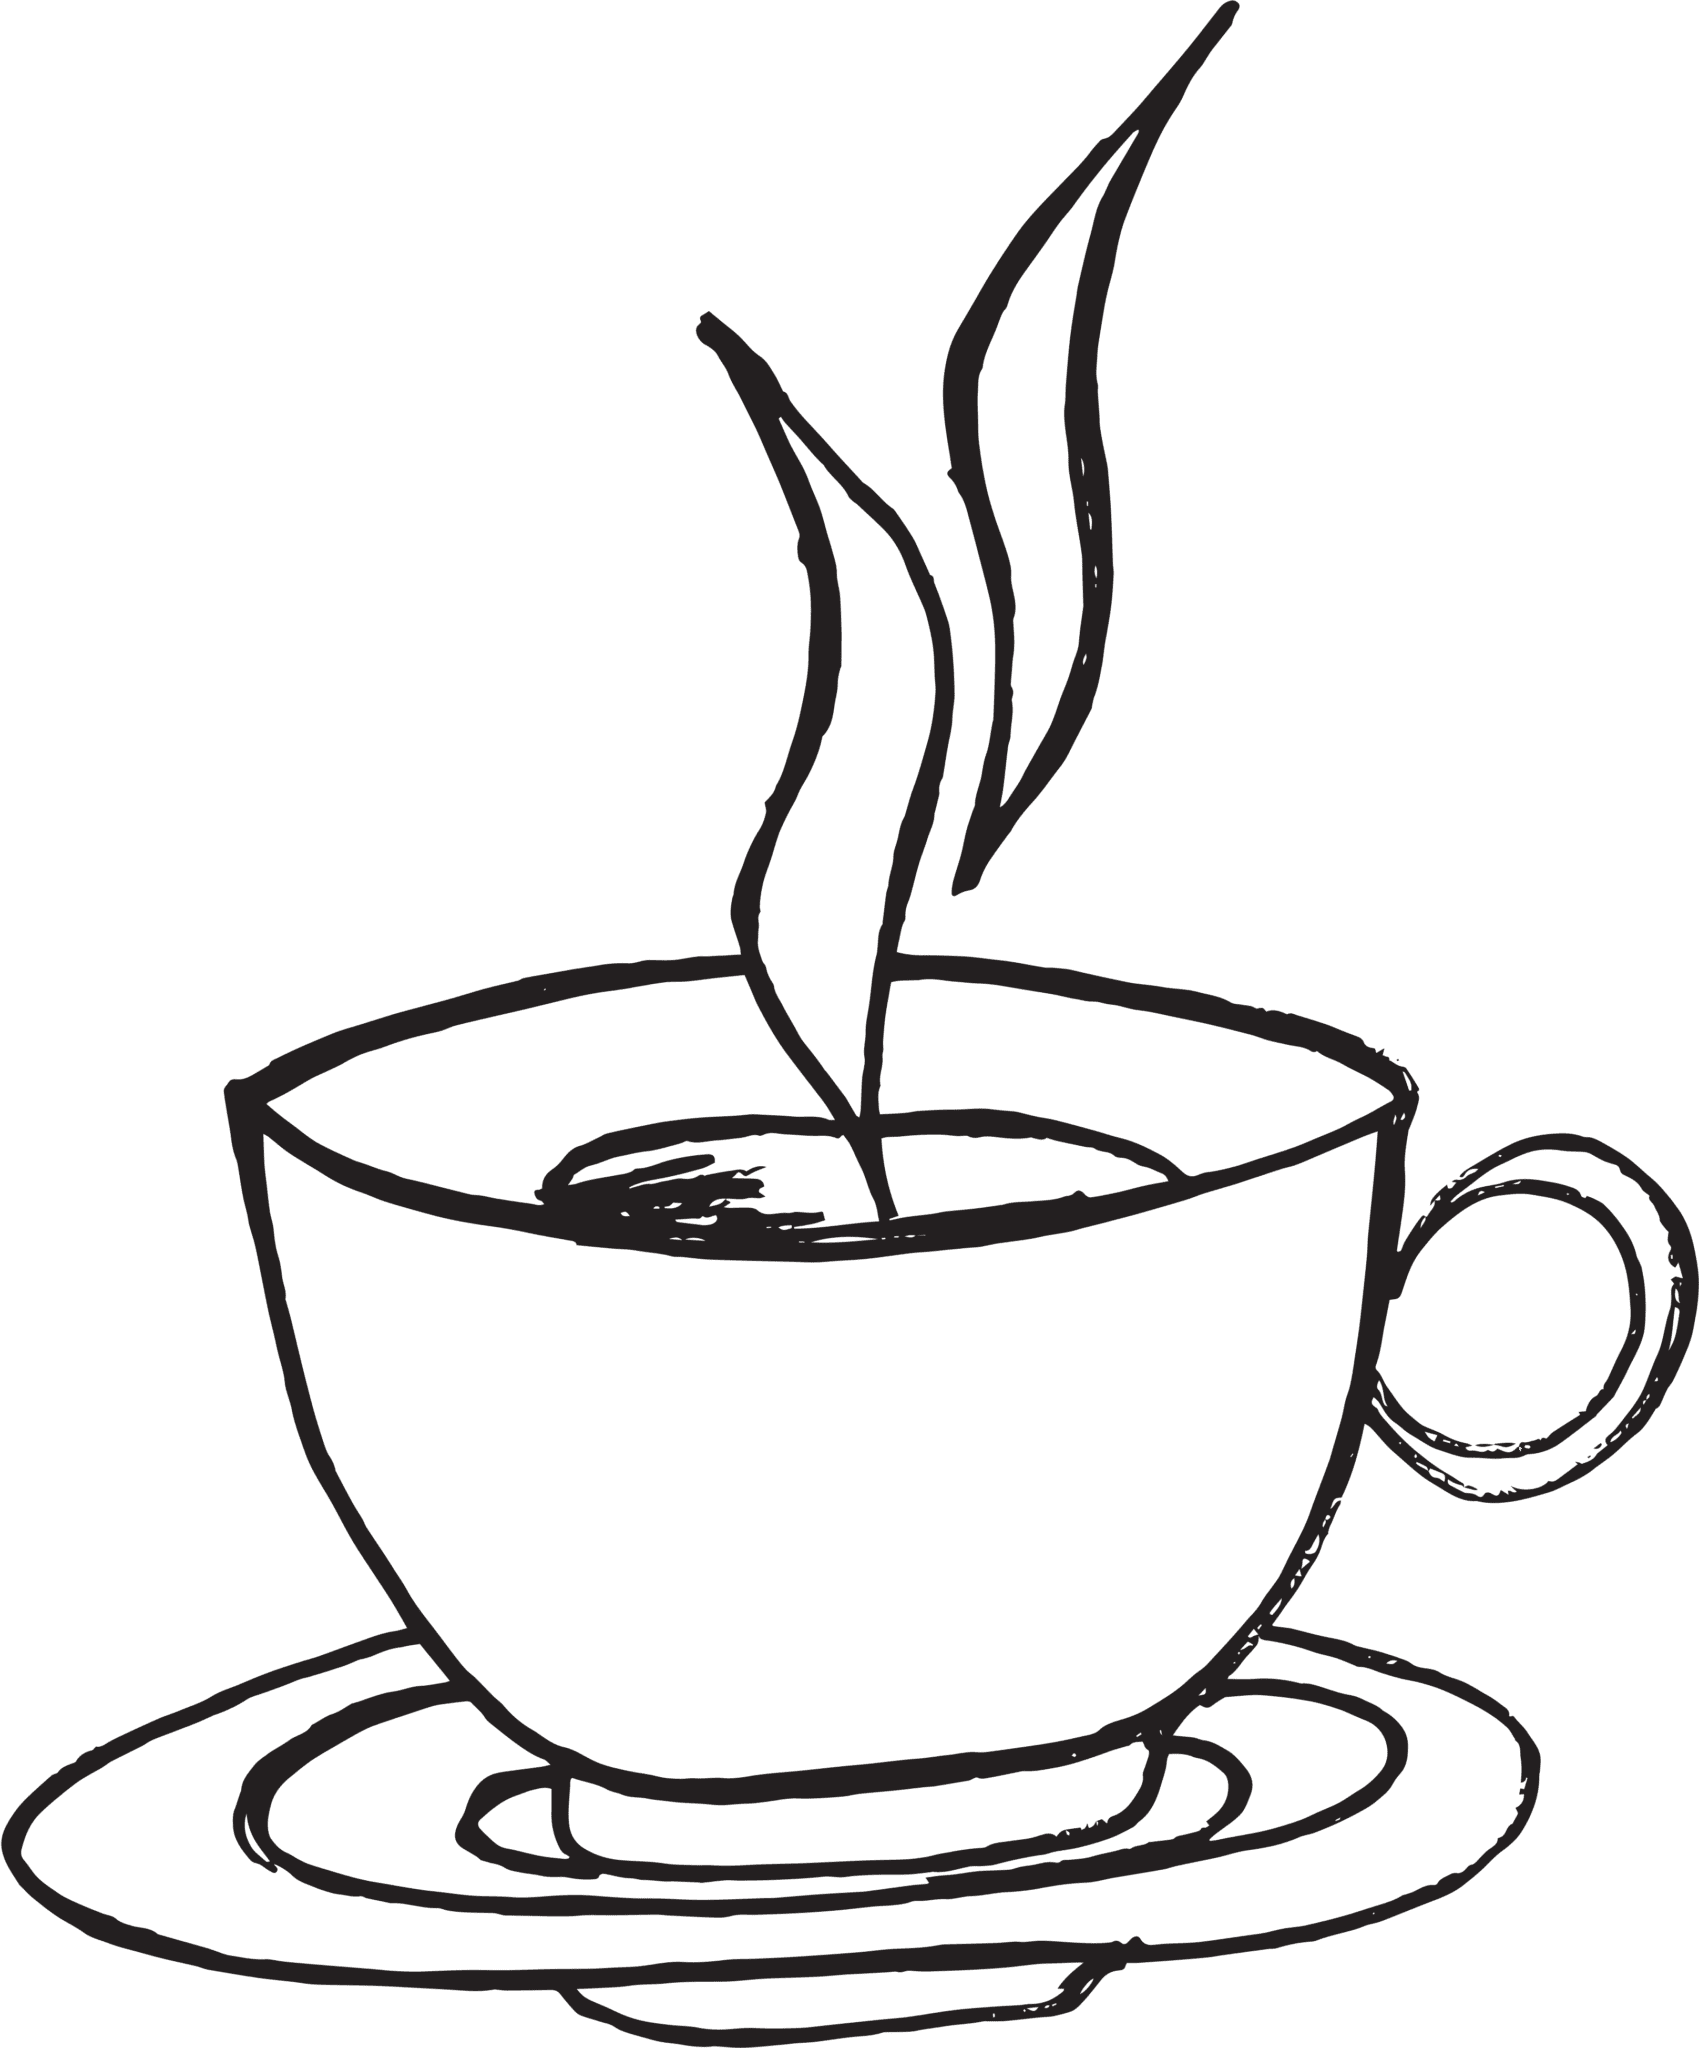 Does Coffee Help or Hurt Focus & Productivity? Erik Qualman